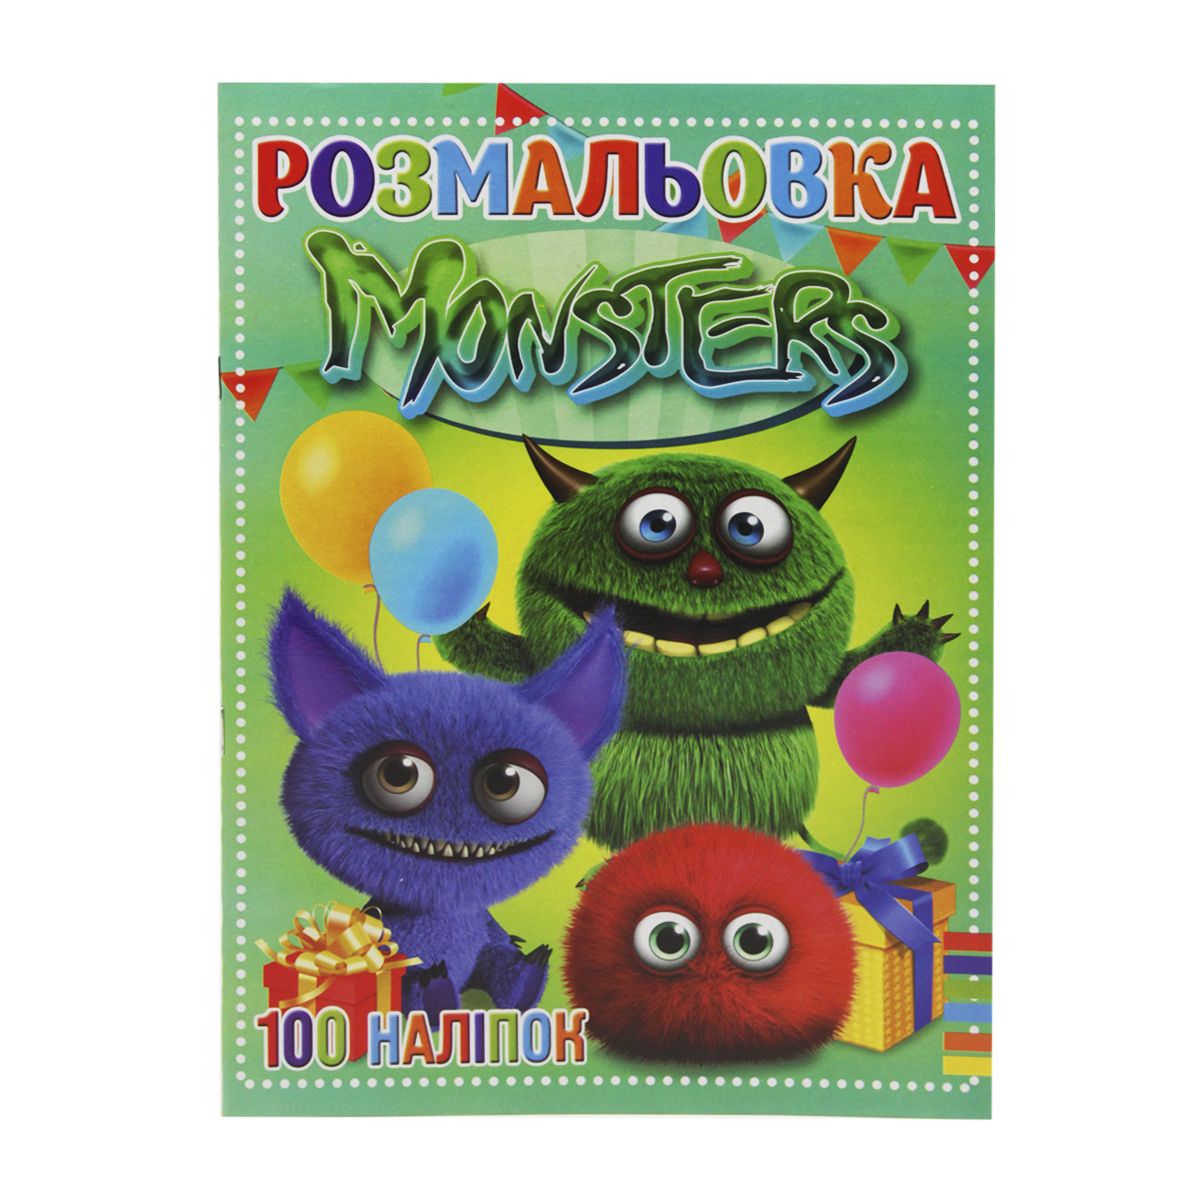 Розмальовка з наклейками "Monsters" (укр)